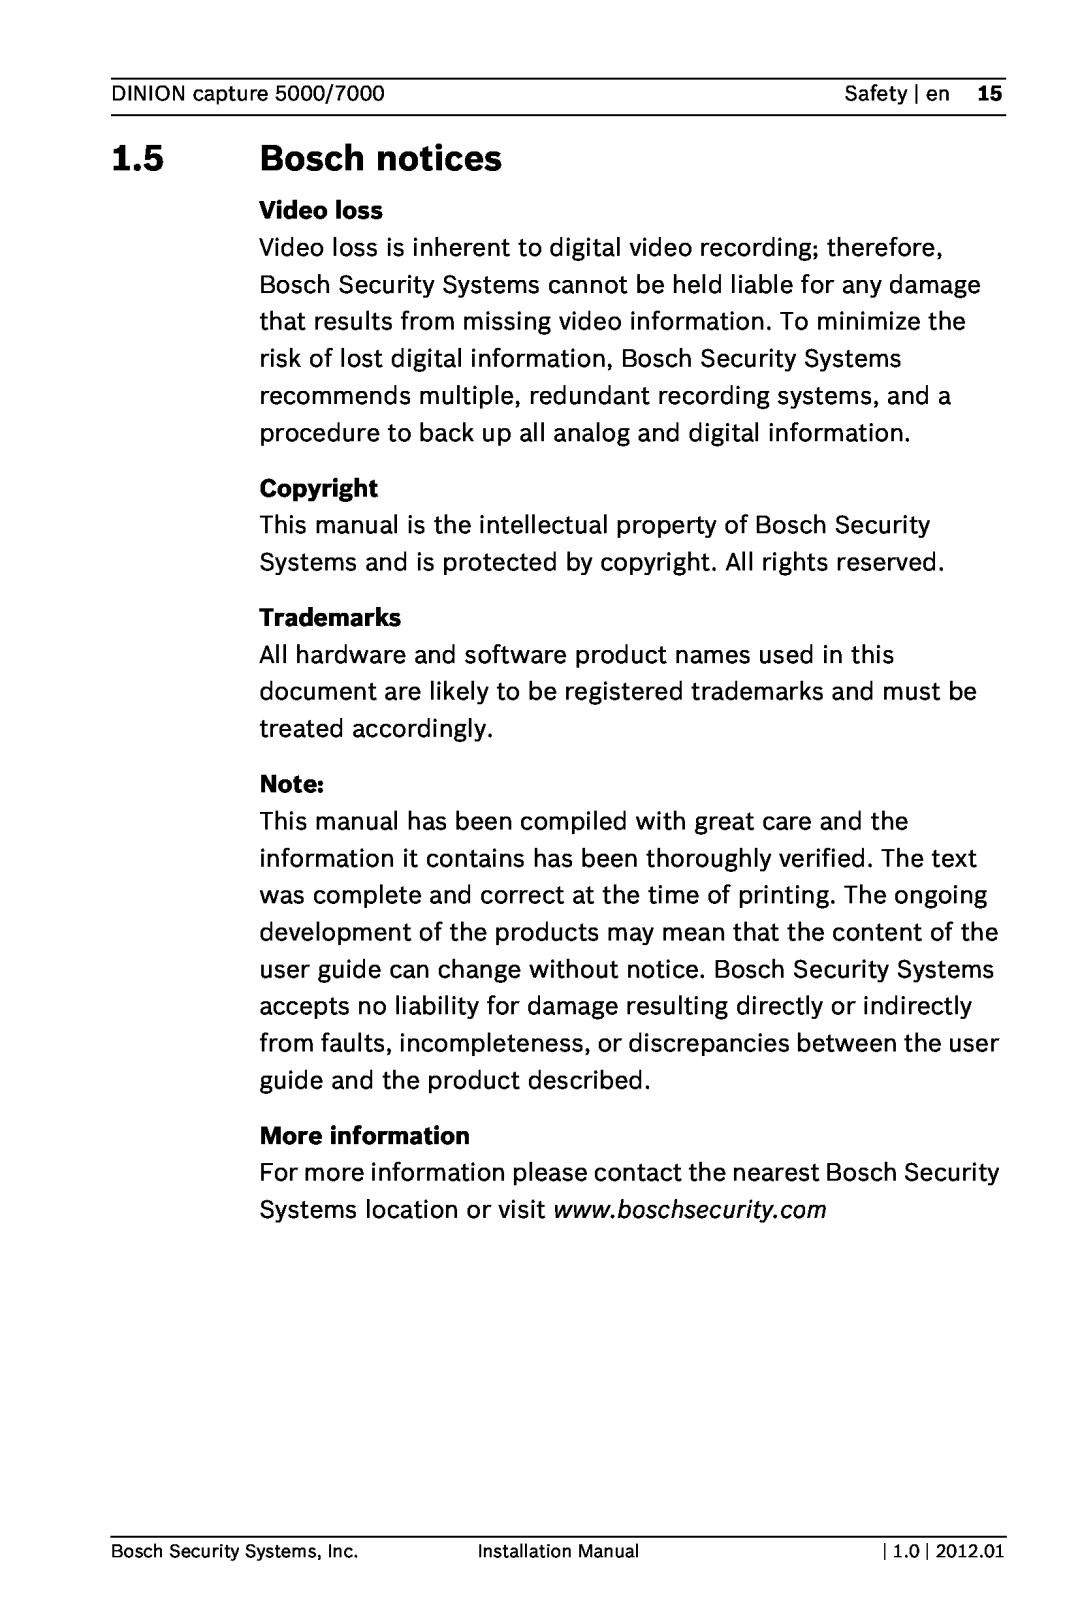 Bosch Appliances 7000, 5000 installation manual 1.5Bosch notices, Video loss, Copyright, Trademarks, More information 